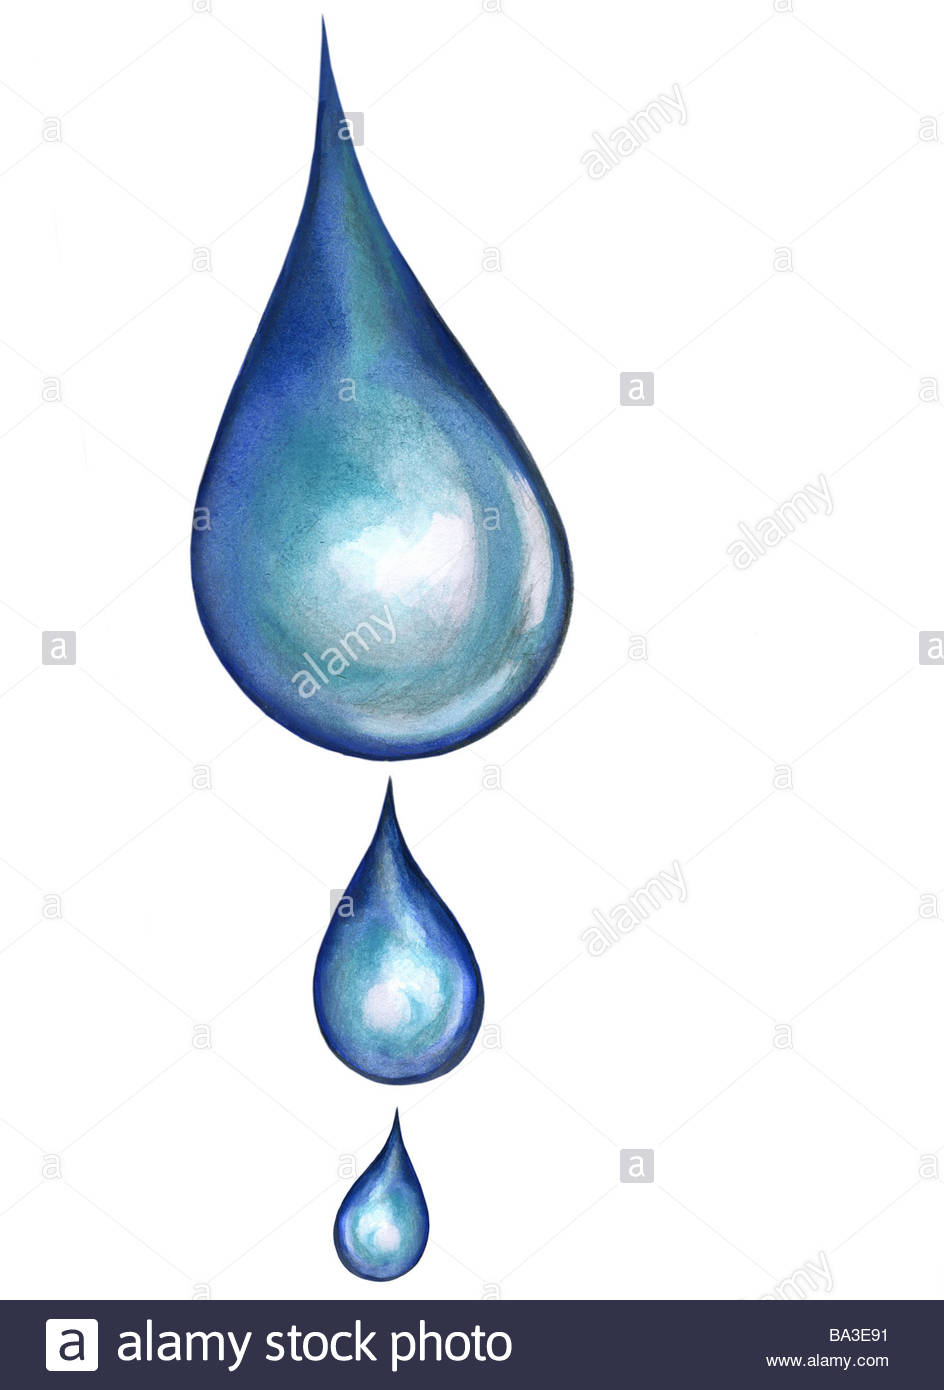 Drop Of Water Drawing at GetDrawings Free download